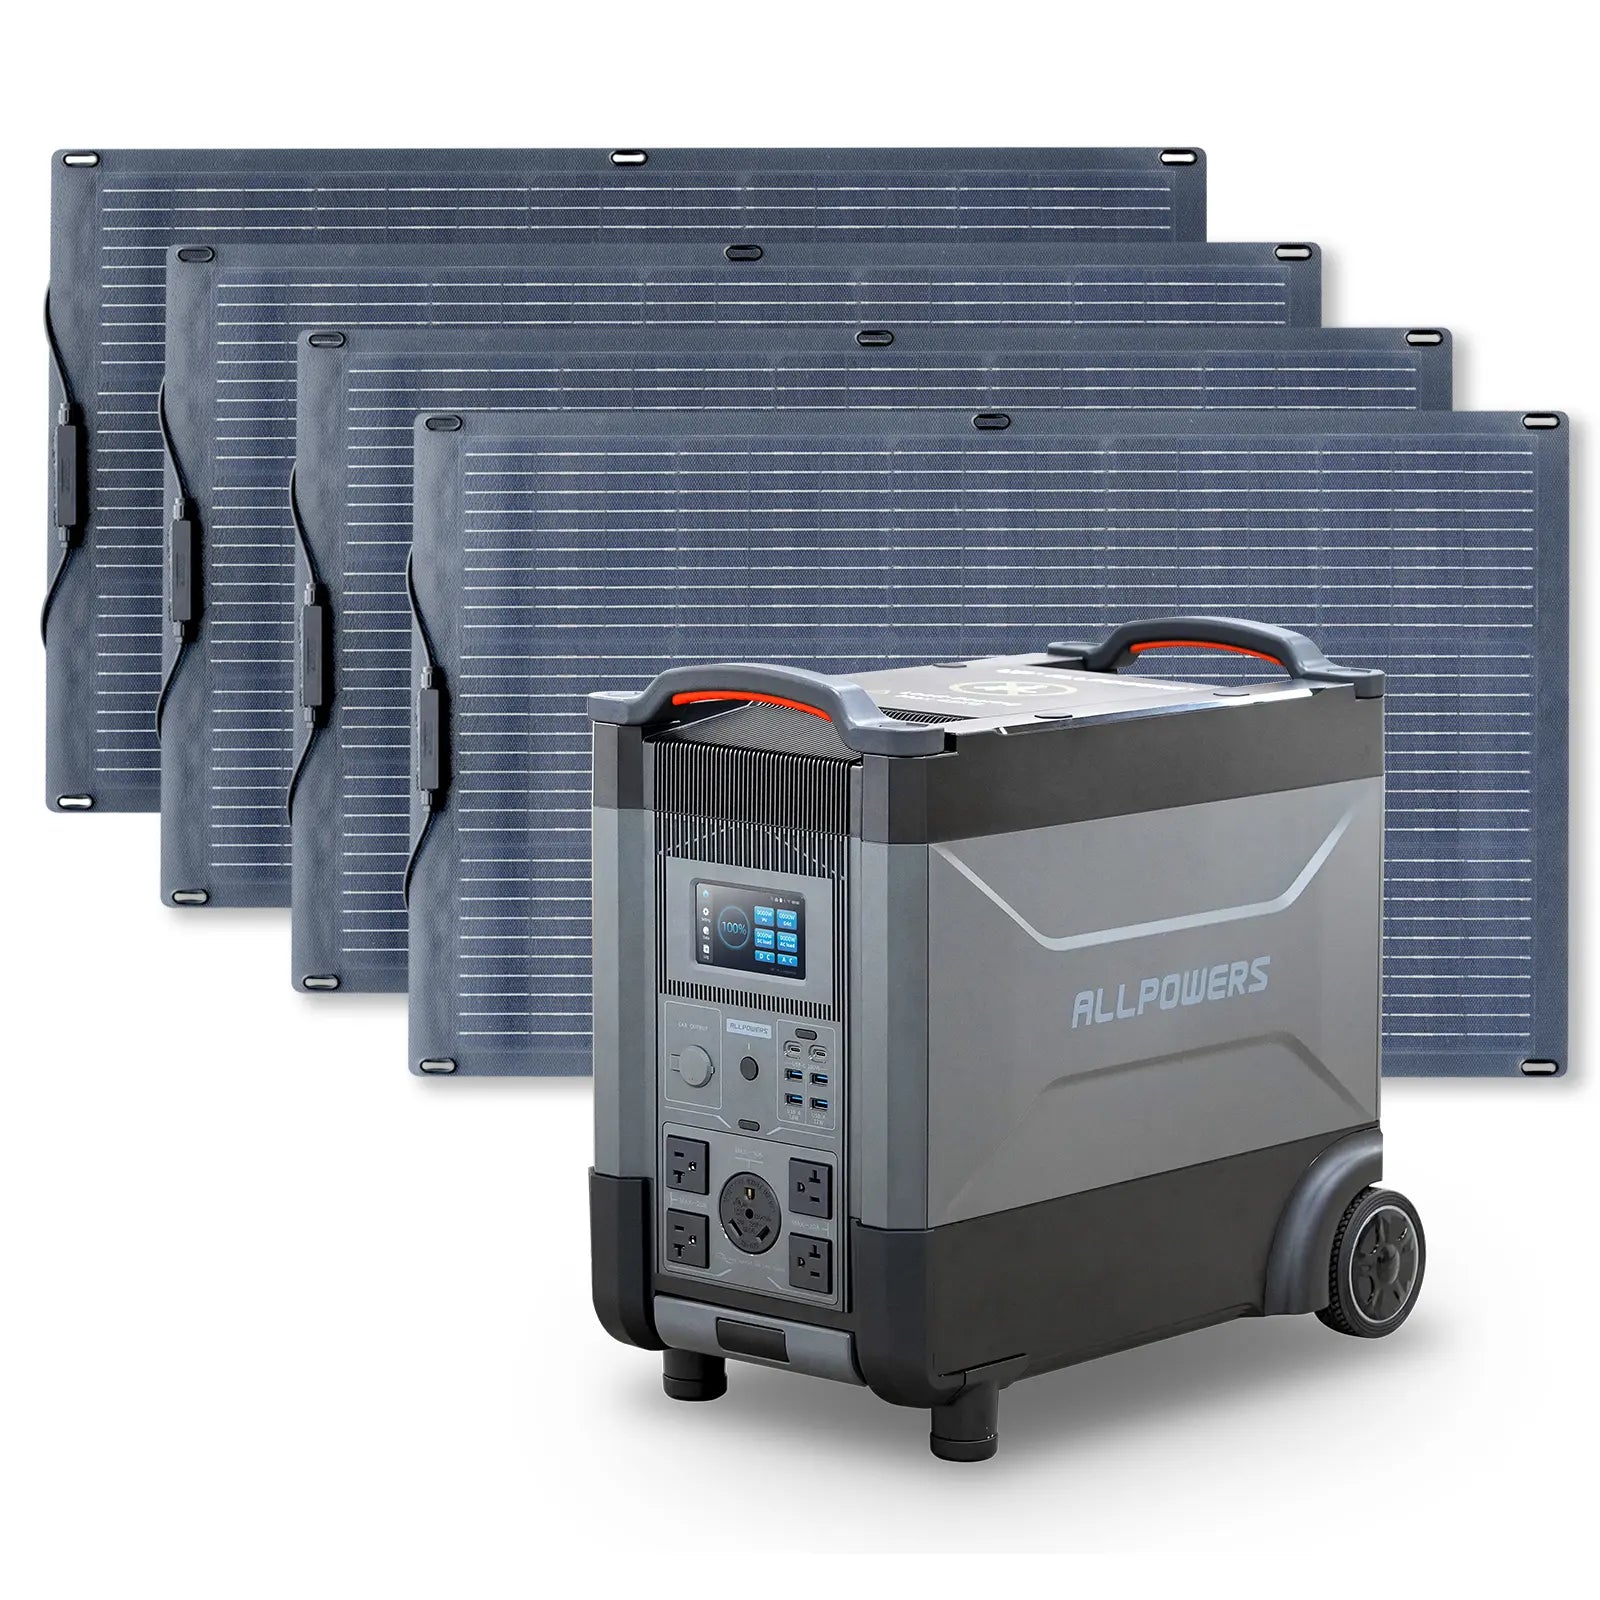 ALLPOWERS Solar Generator Kit 4000W (R4000 + 4 x SF100 100W Flexible Solar Panel)